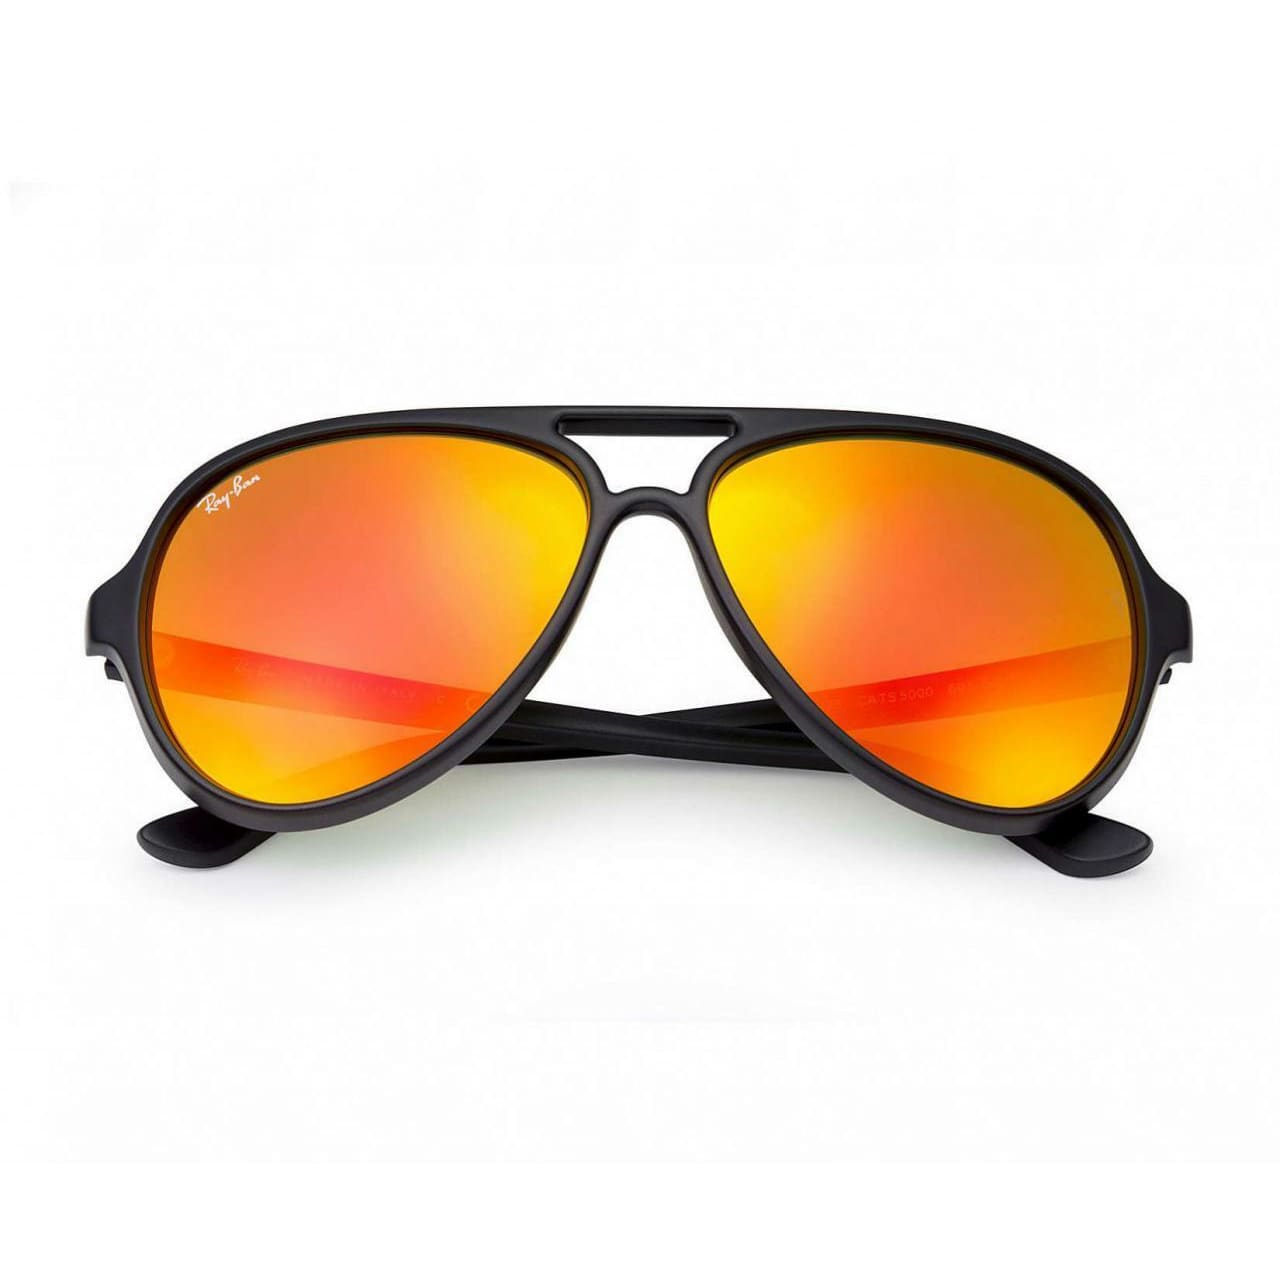 Ray-Ban RB4125 601S69 Cats 5000 Orange Flash Lenses Black Frame Pilot Sunglasses 8053672401639